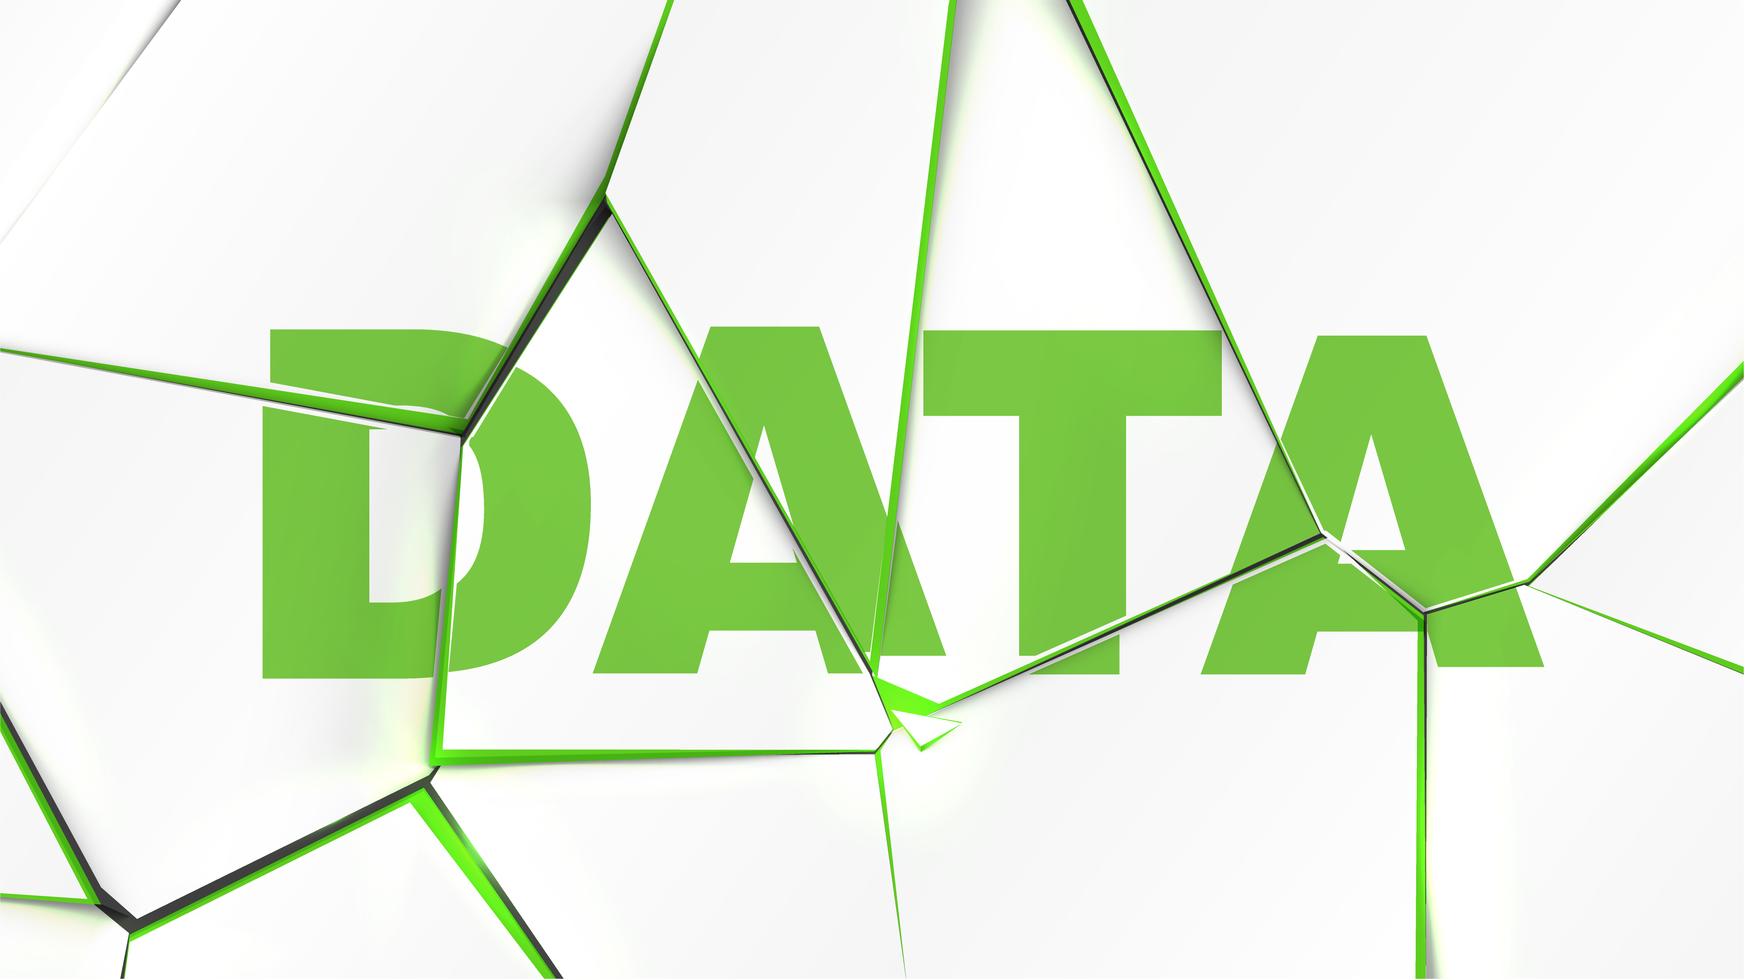 Word of 'DATA' on a broken white surface, vector illustration